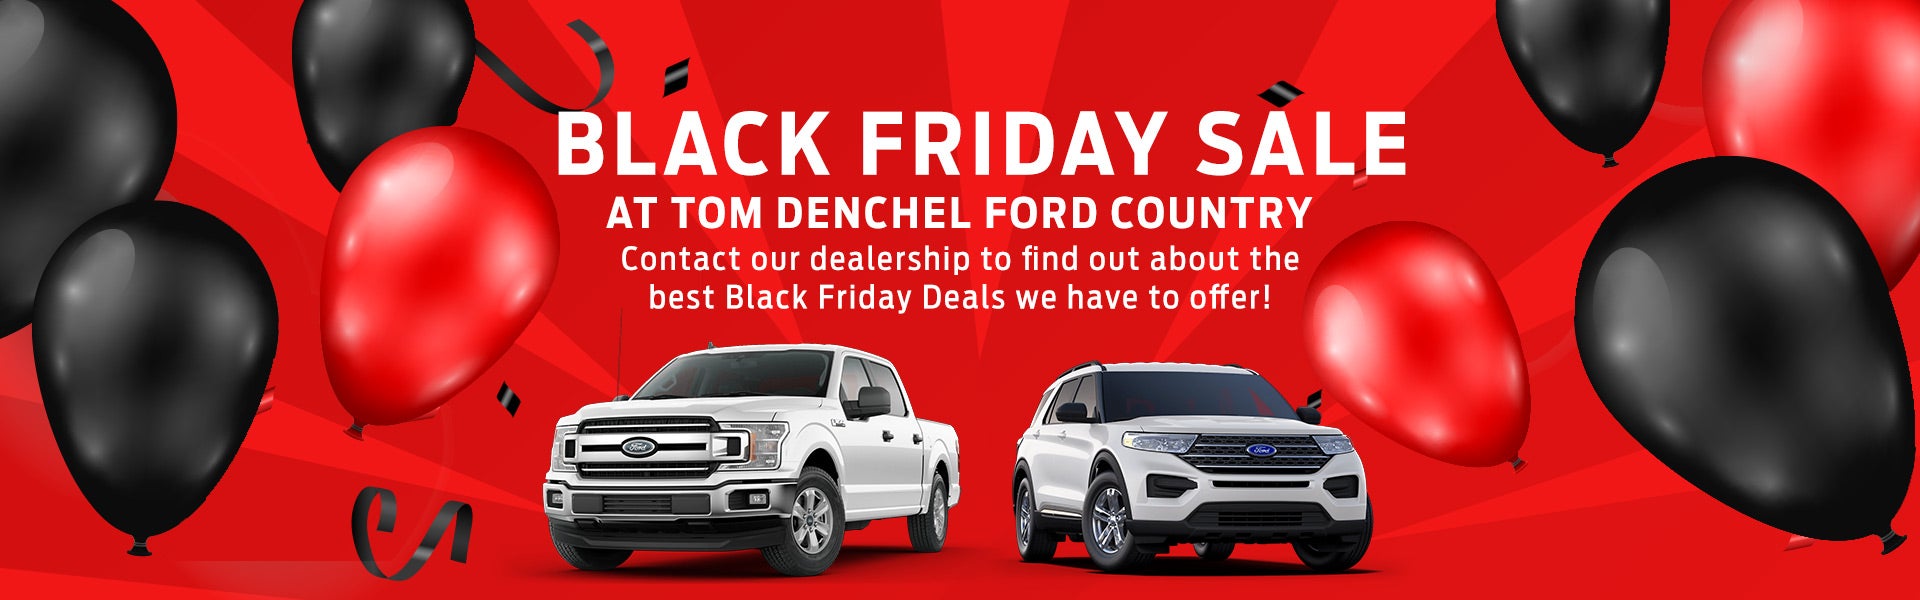 Tom Denchel Ford Black Friday Sale